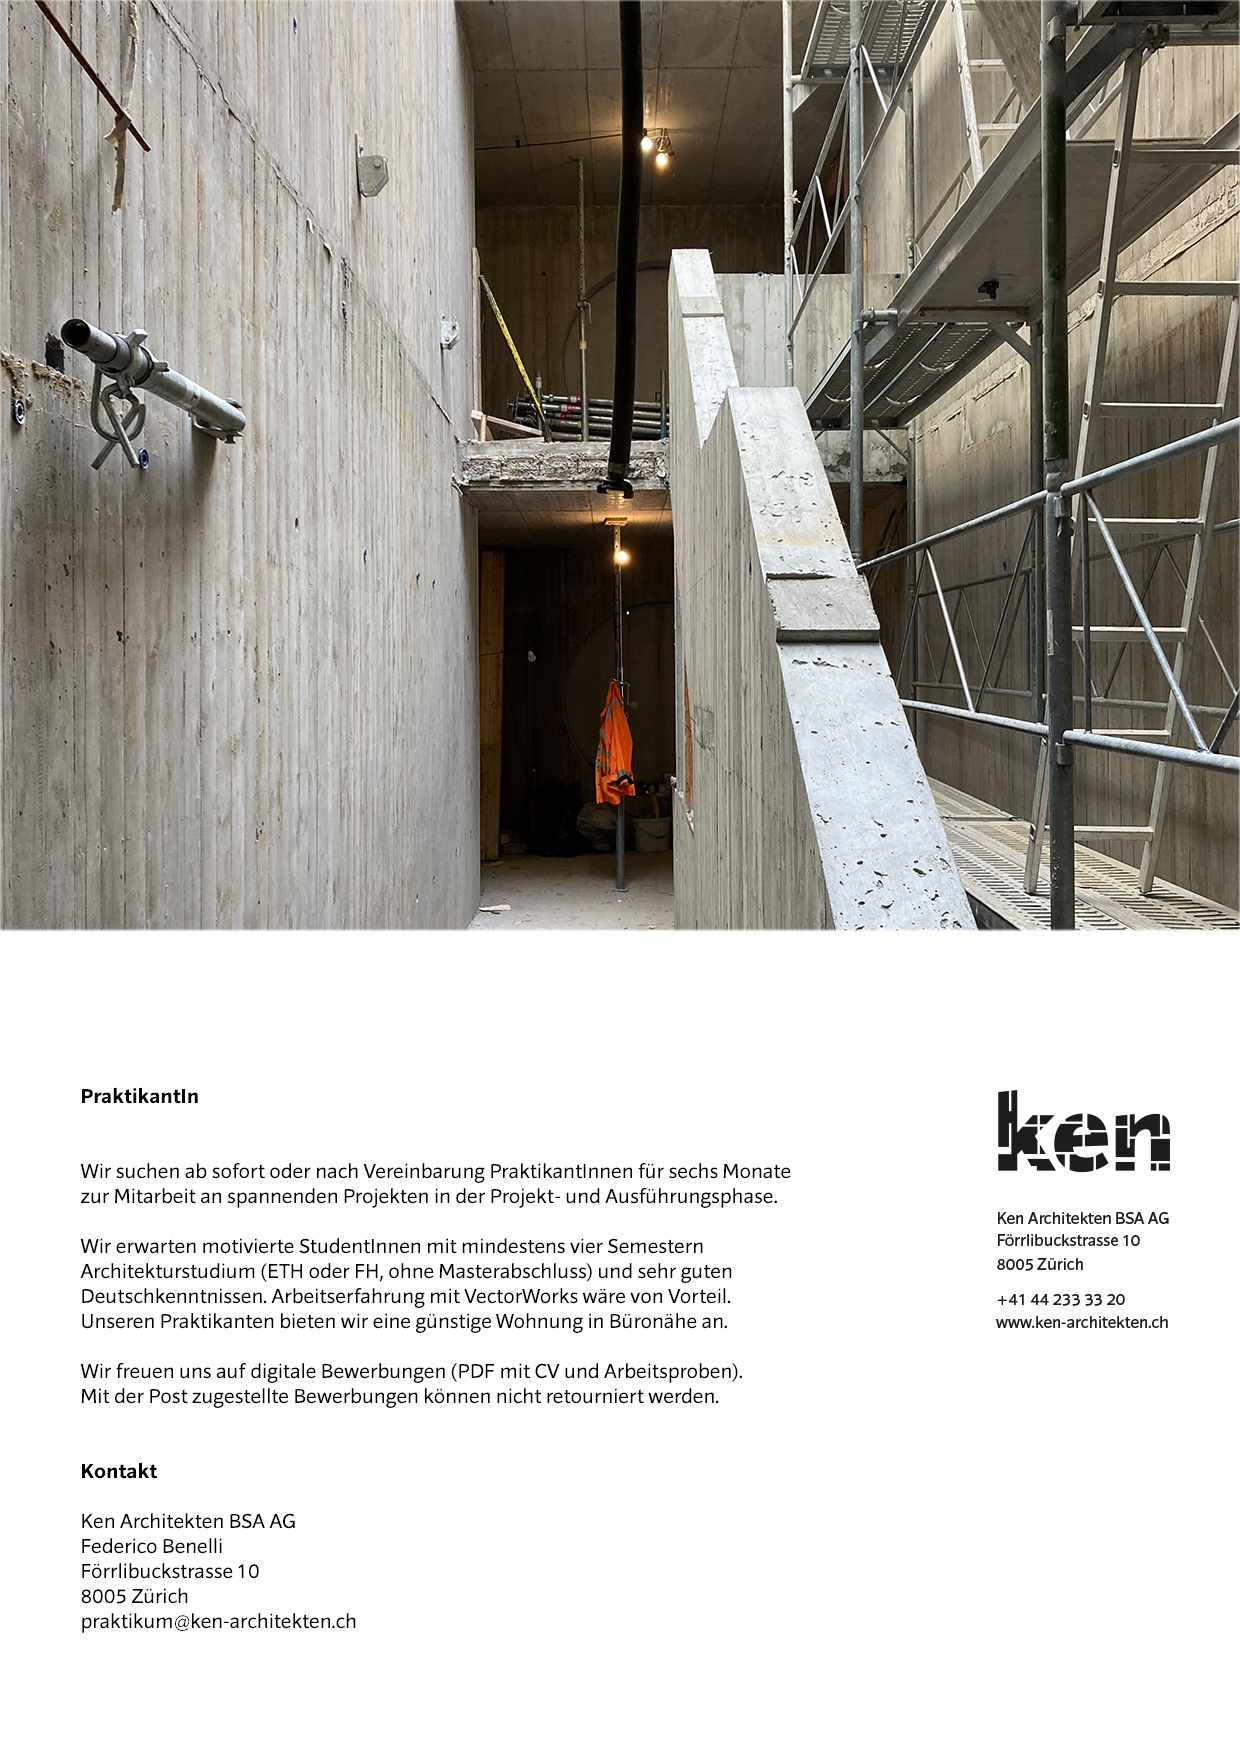 Ken Architekten BSA AG